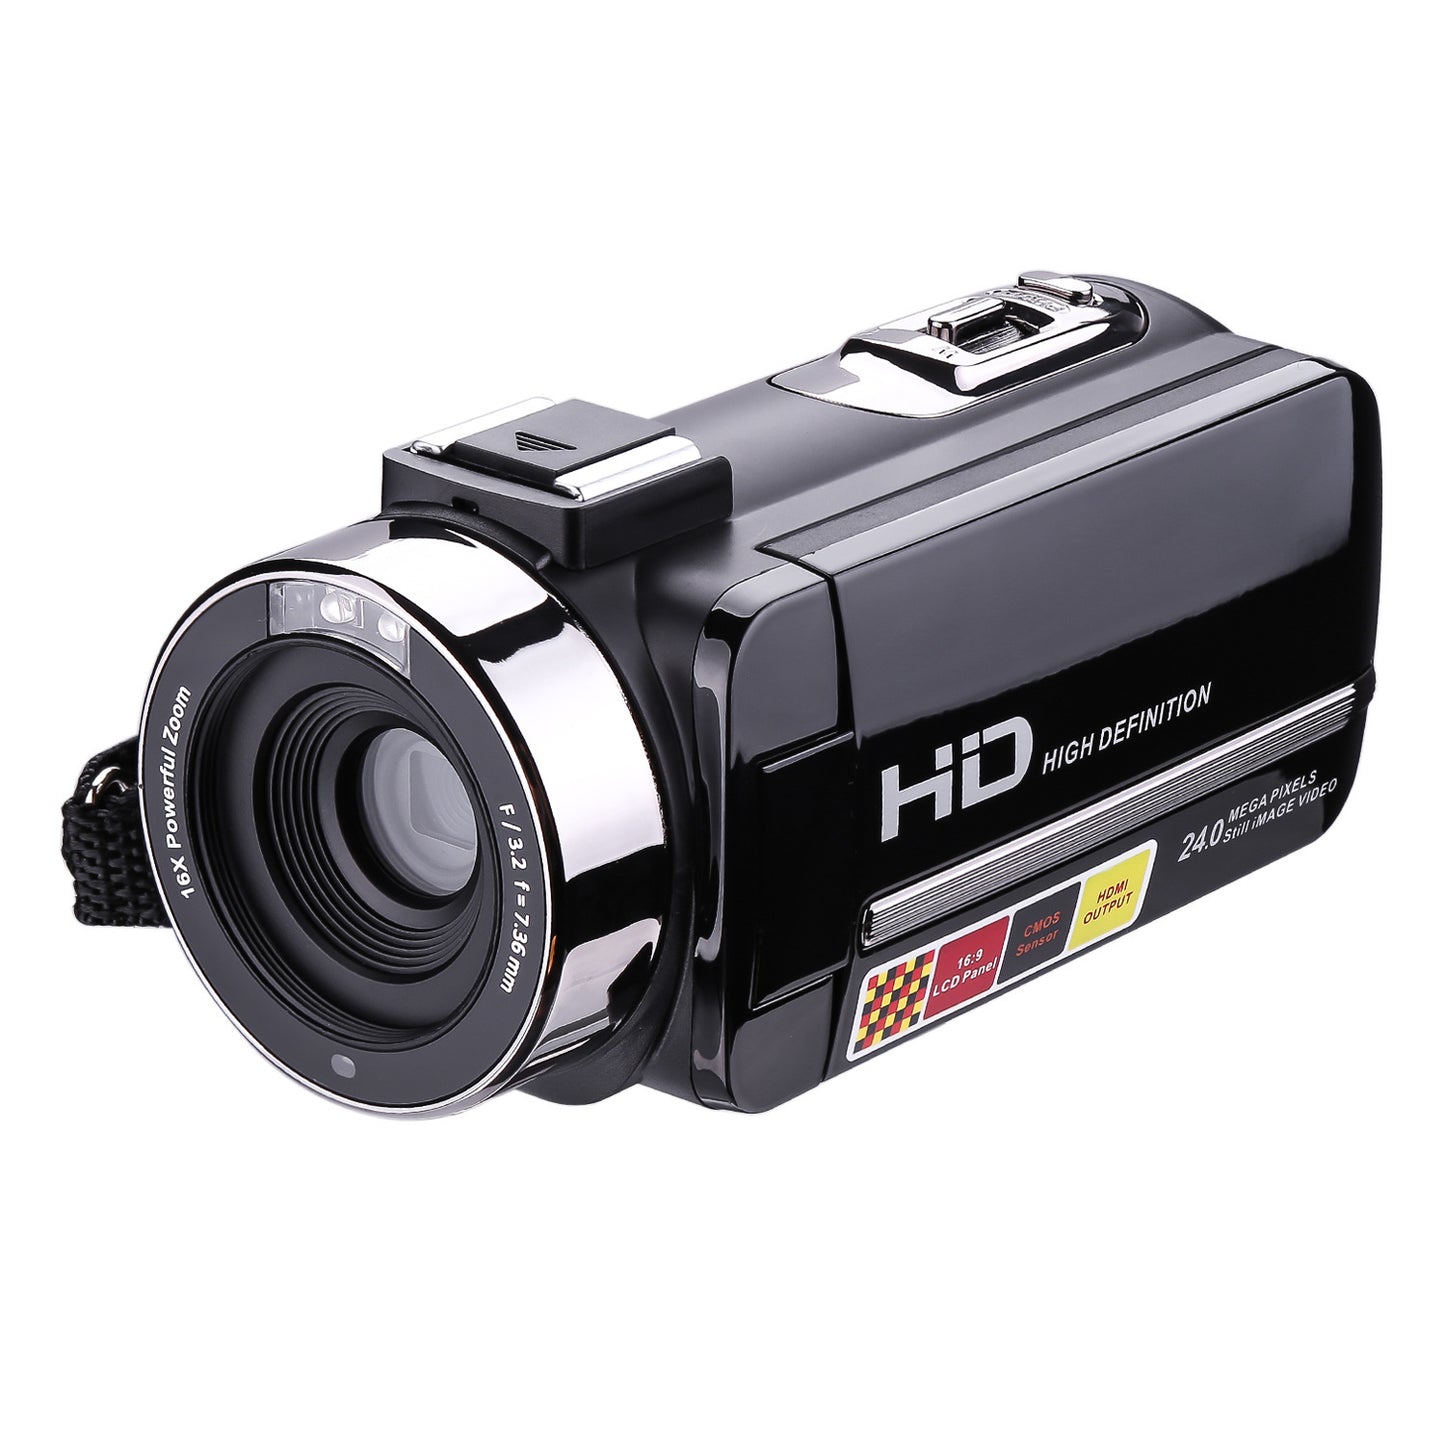 HDV-301STRM HD camera